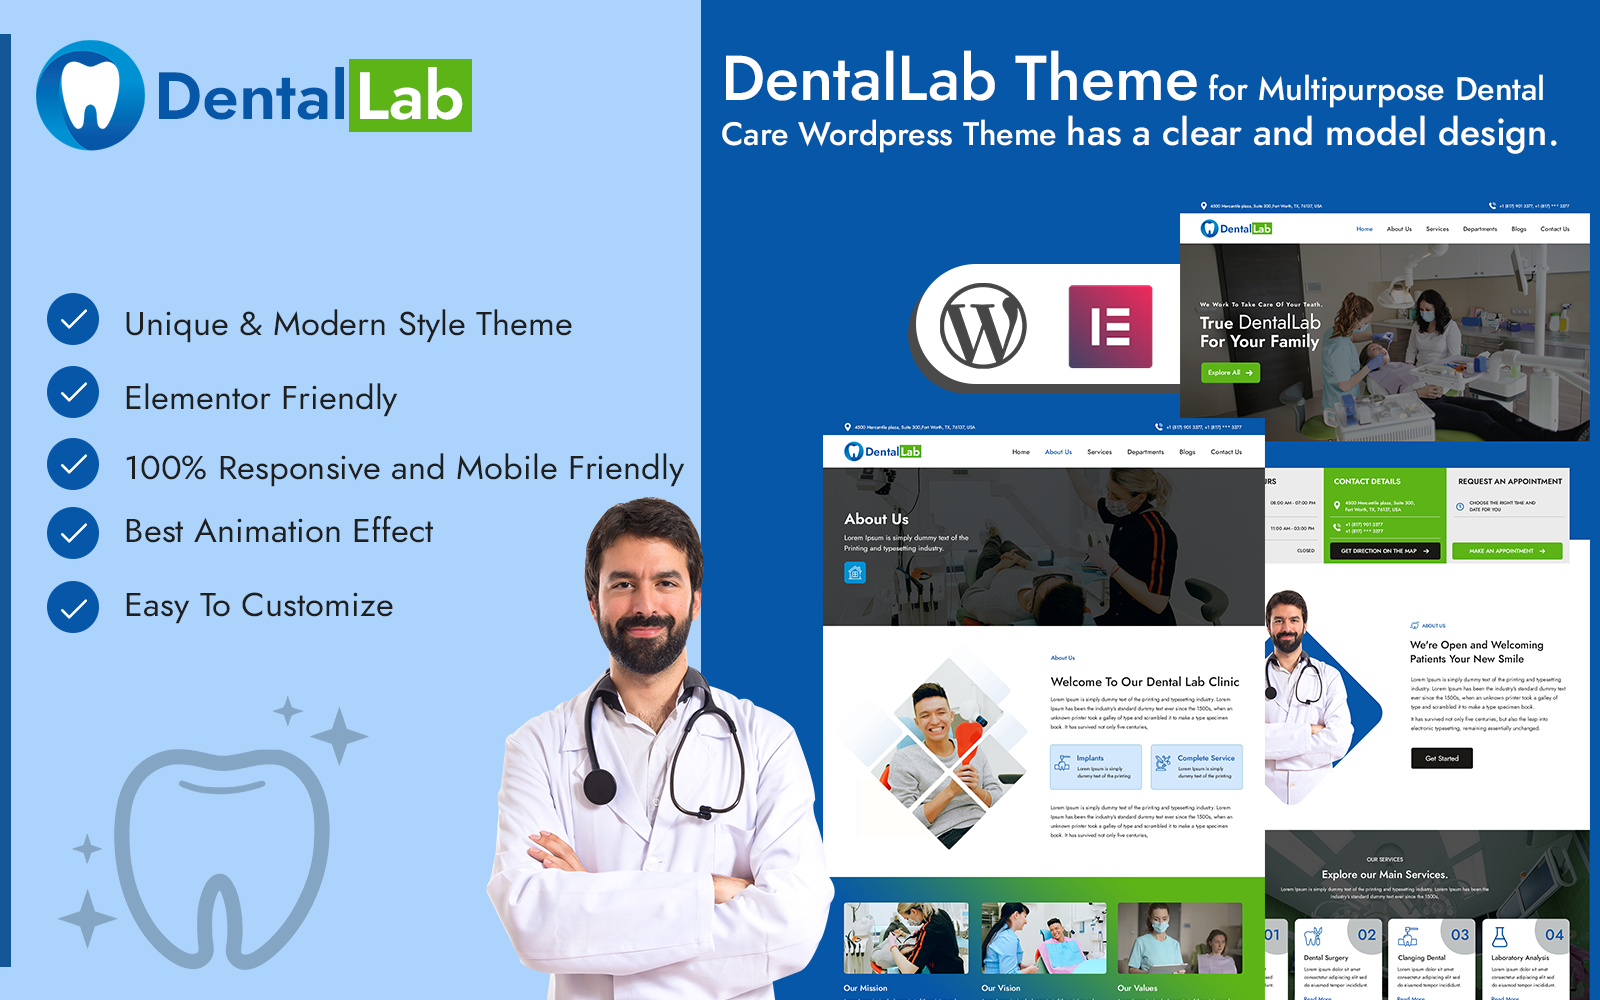 DentalLab Dental Care and Dental Clinic WordPress Theme